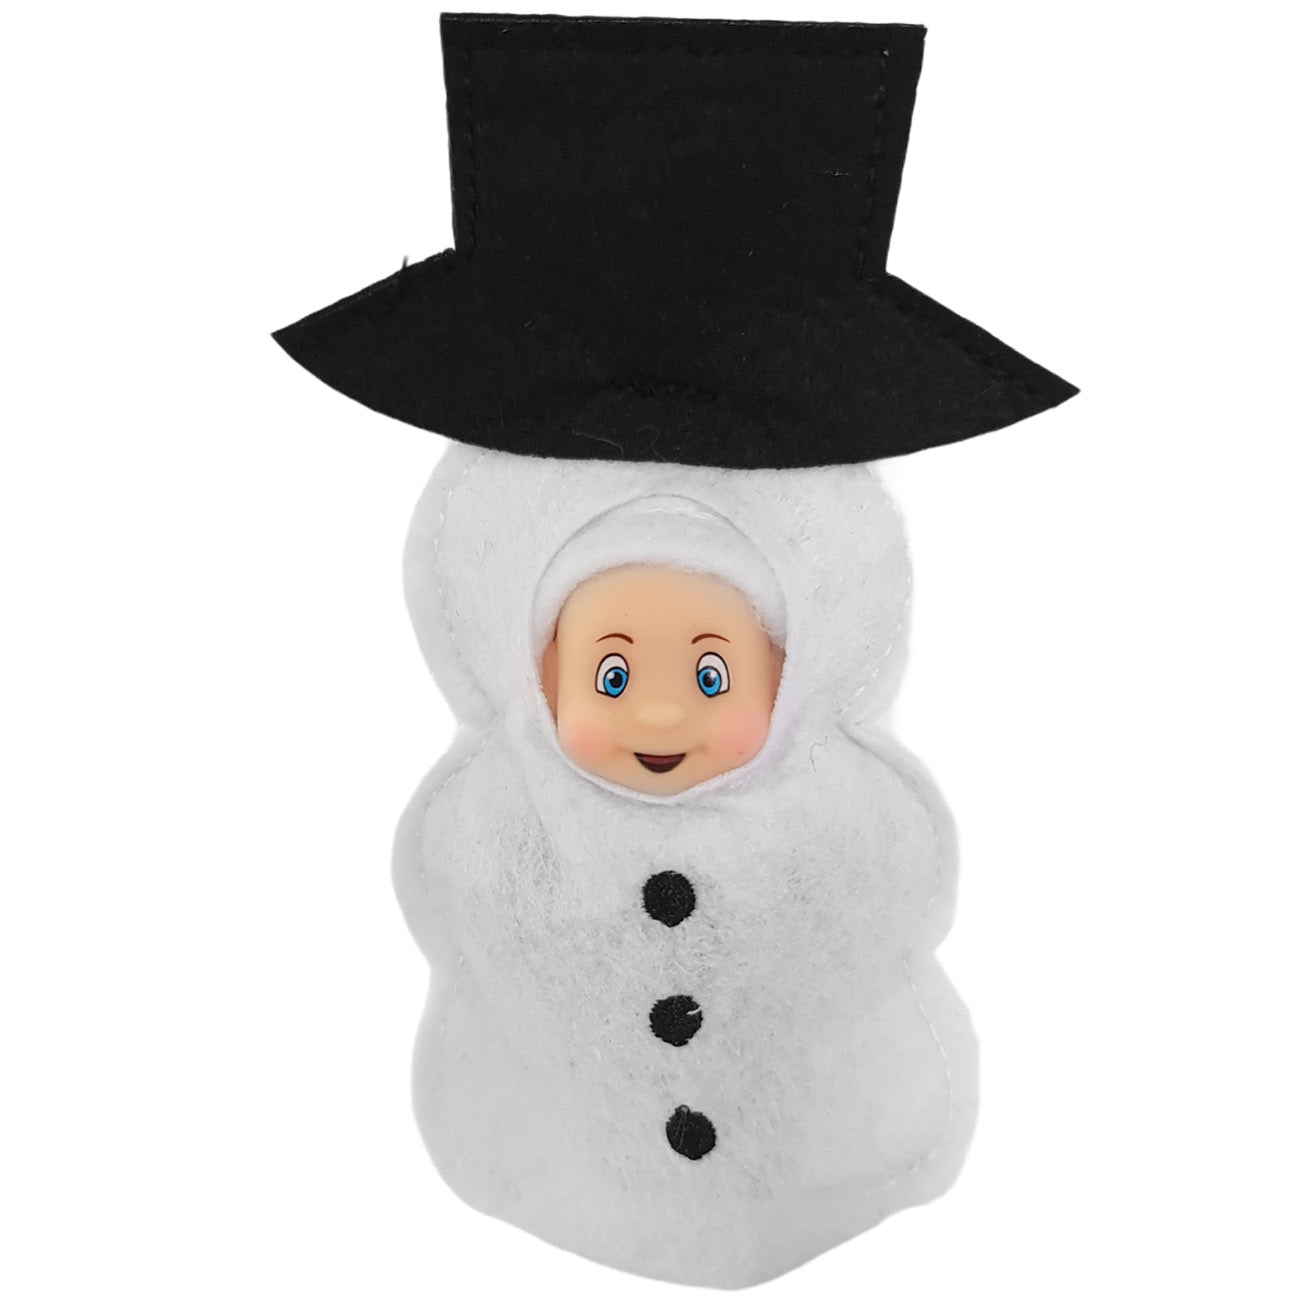 Snowman Elf Baby Costume